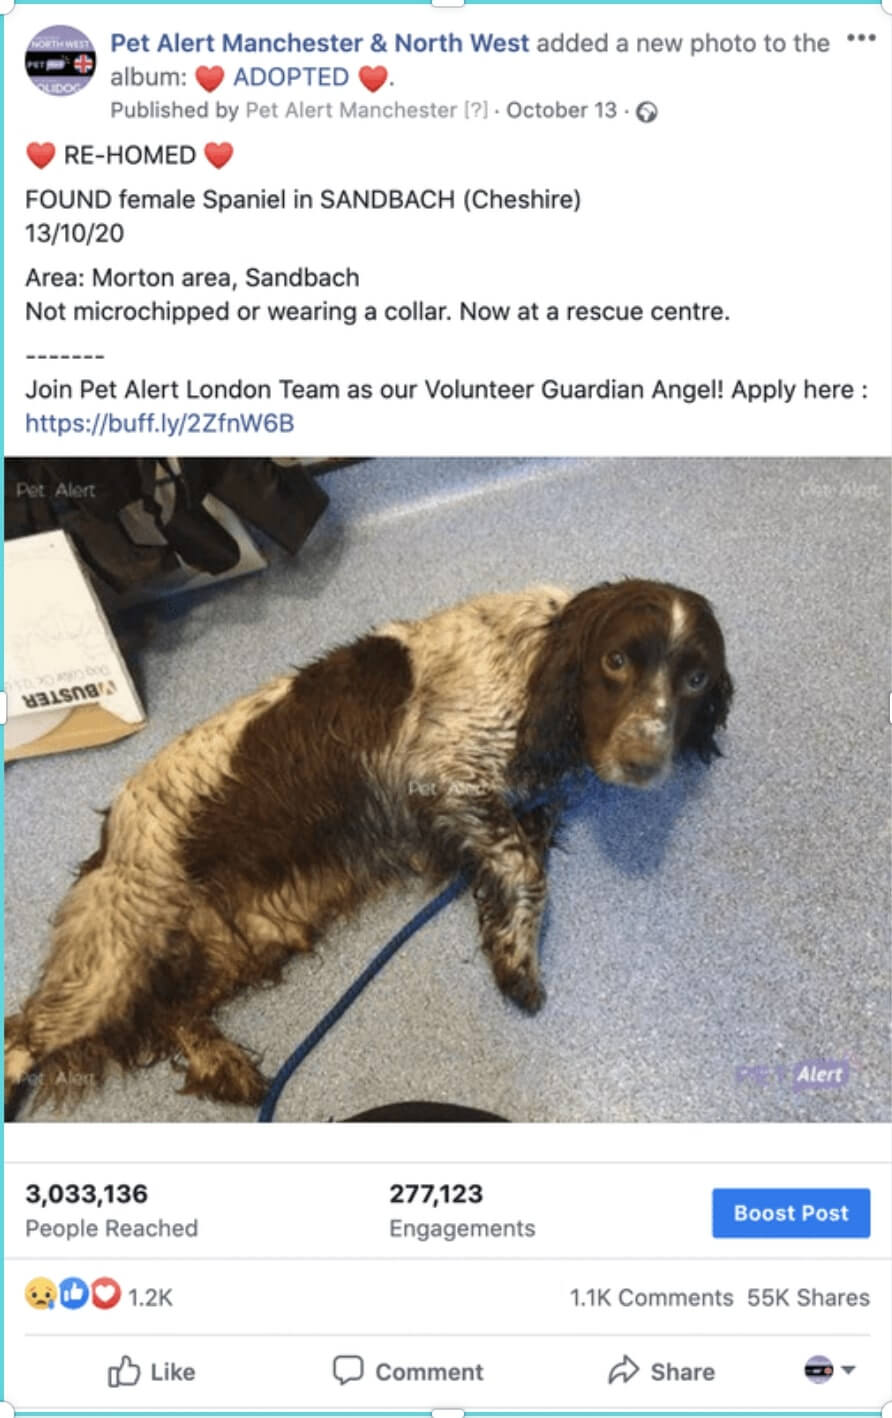 Pet Alert in the UK